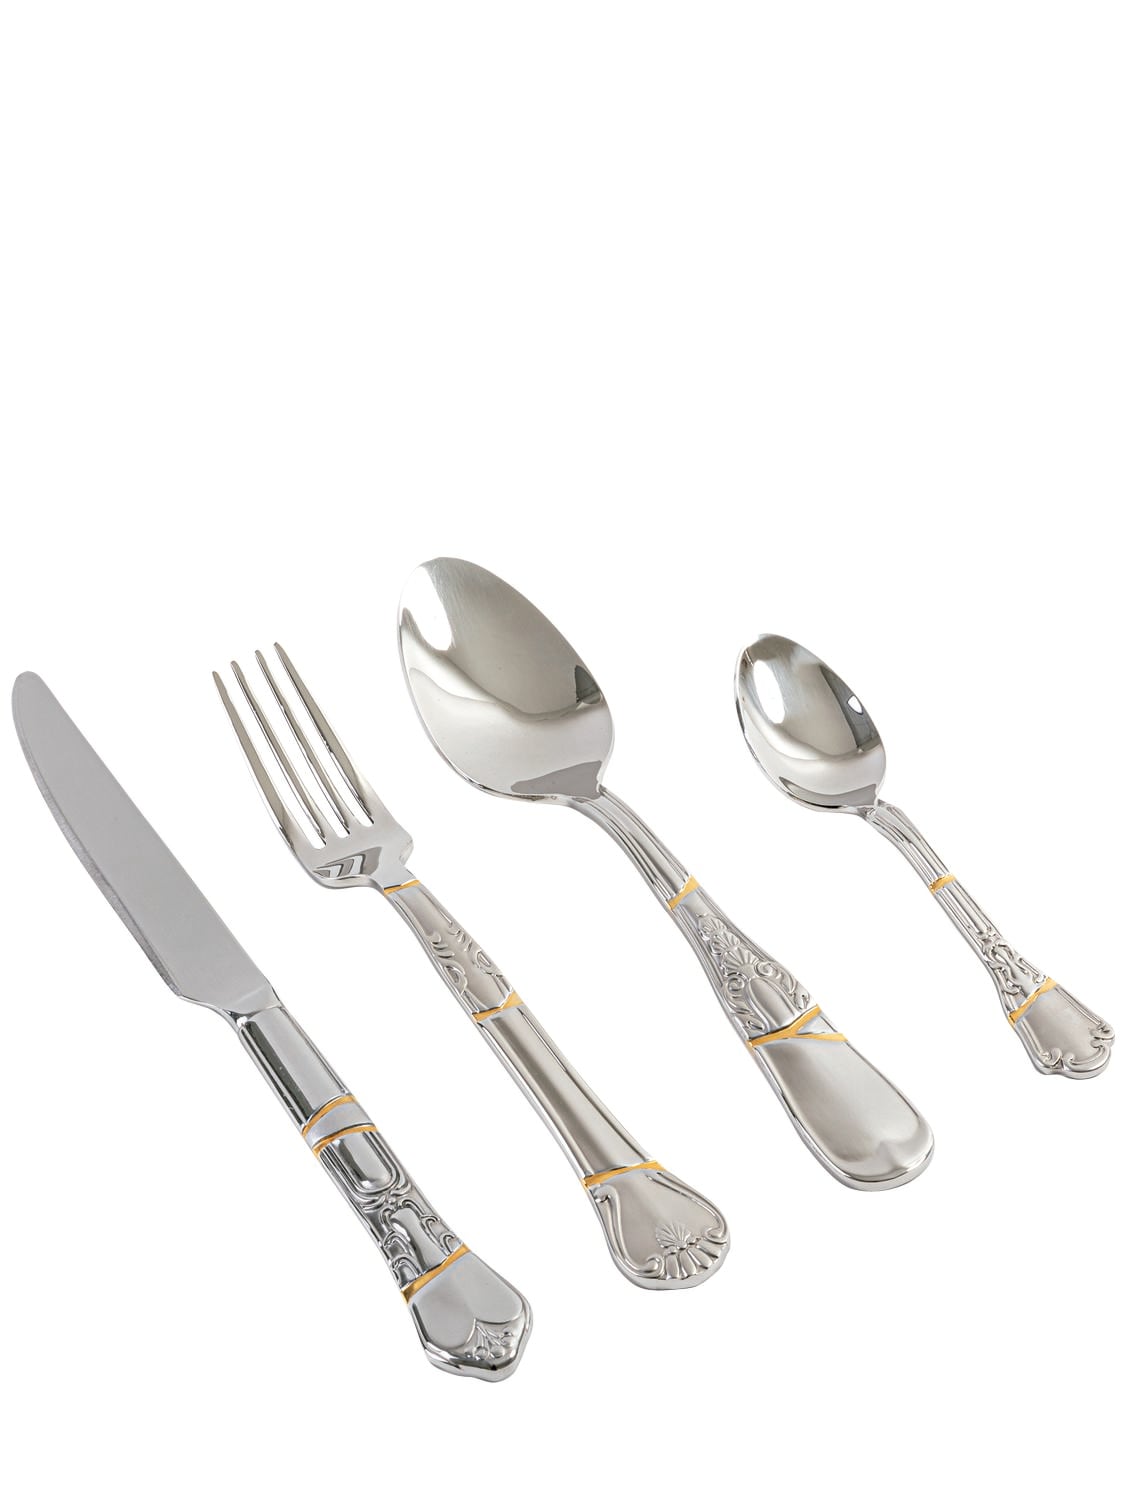 Image of Kintsugi Stainless Steel Cutlery Set